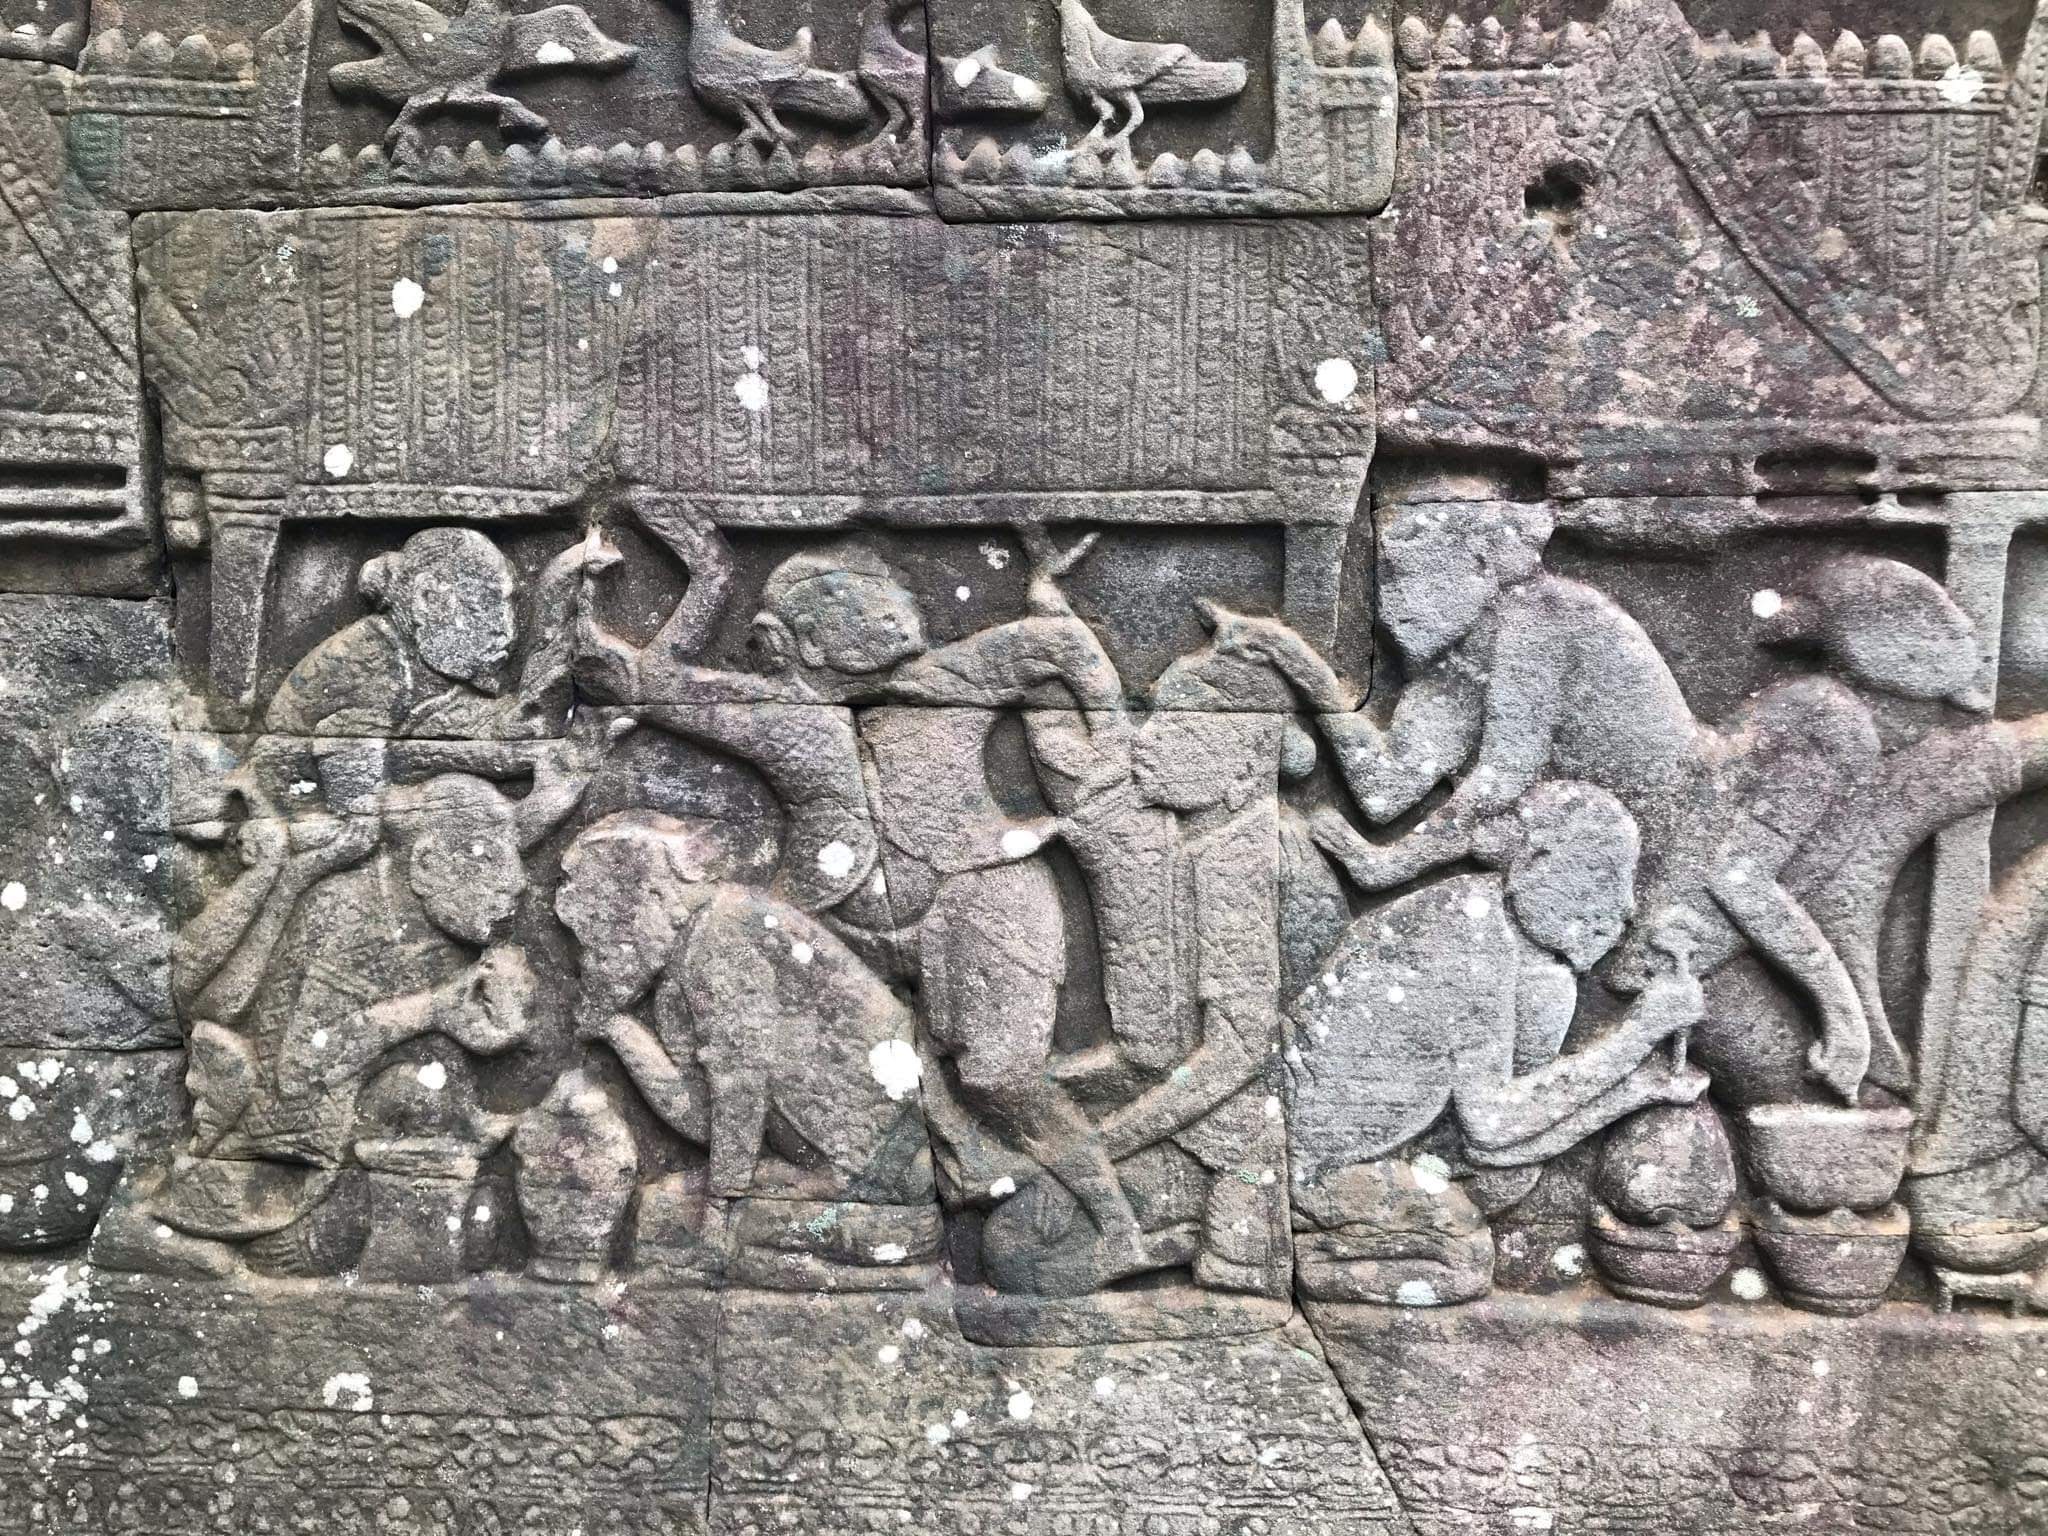 Stone carving in Angkor Wat